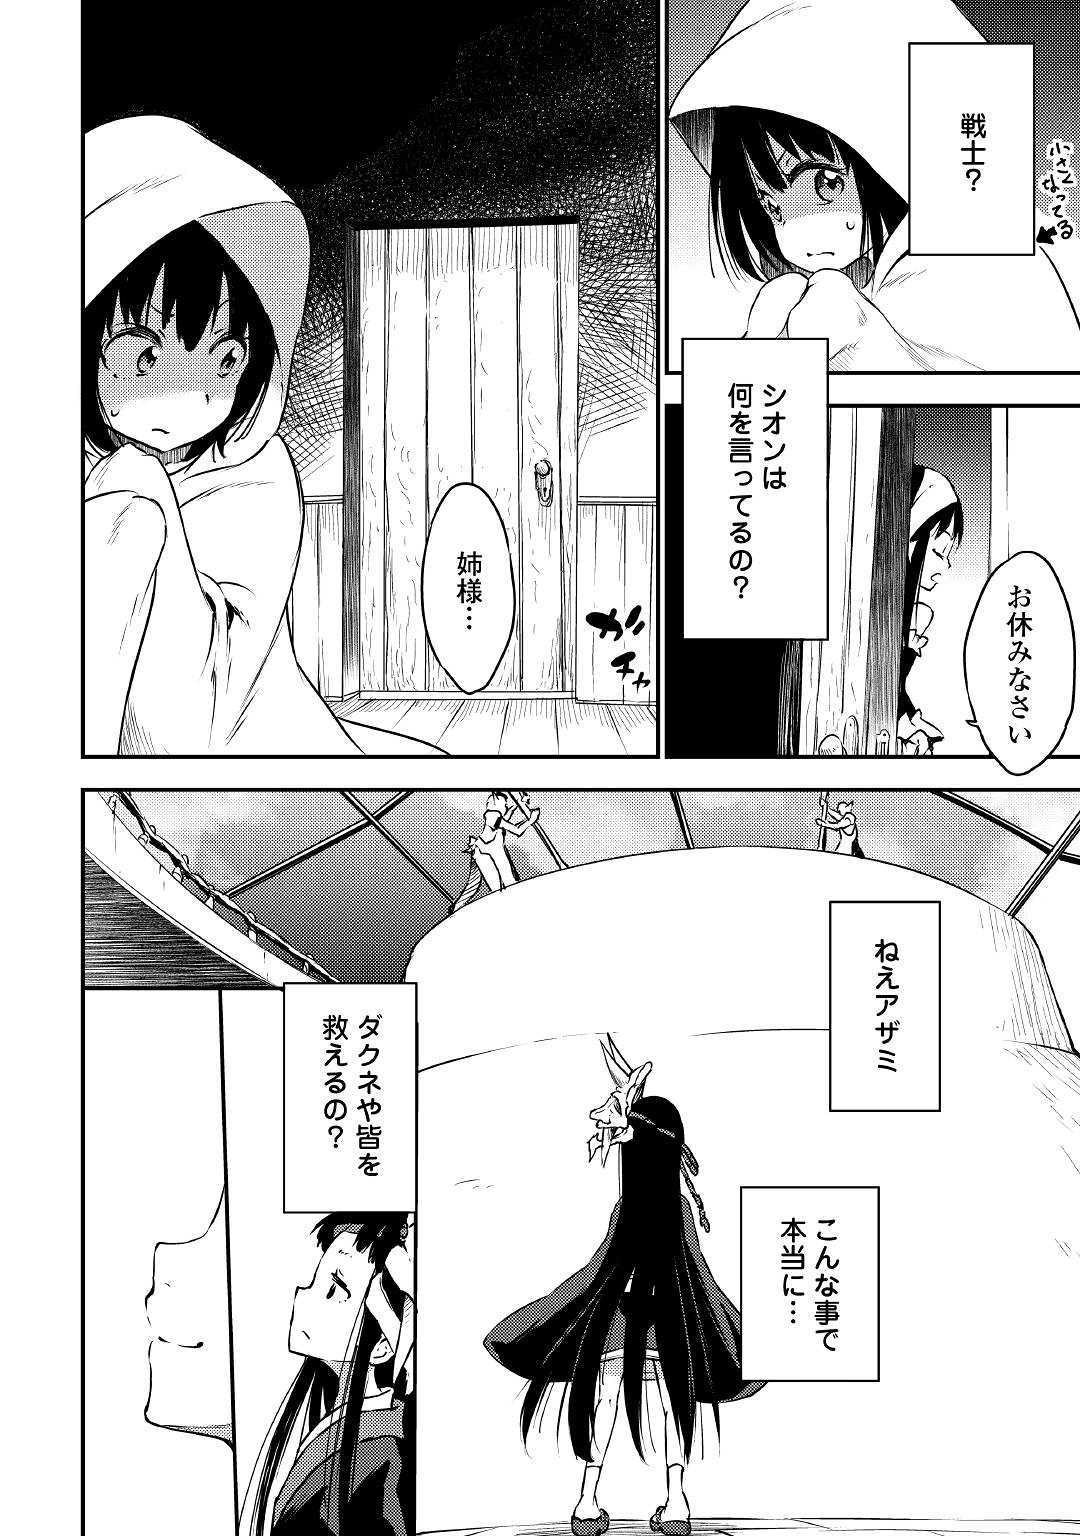 Yuusha no Mago to Maou no Musume - Chapter 19 - Page 26